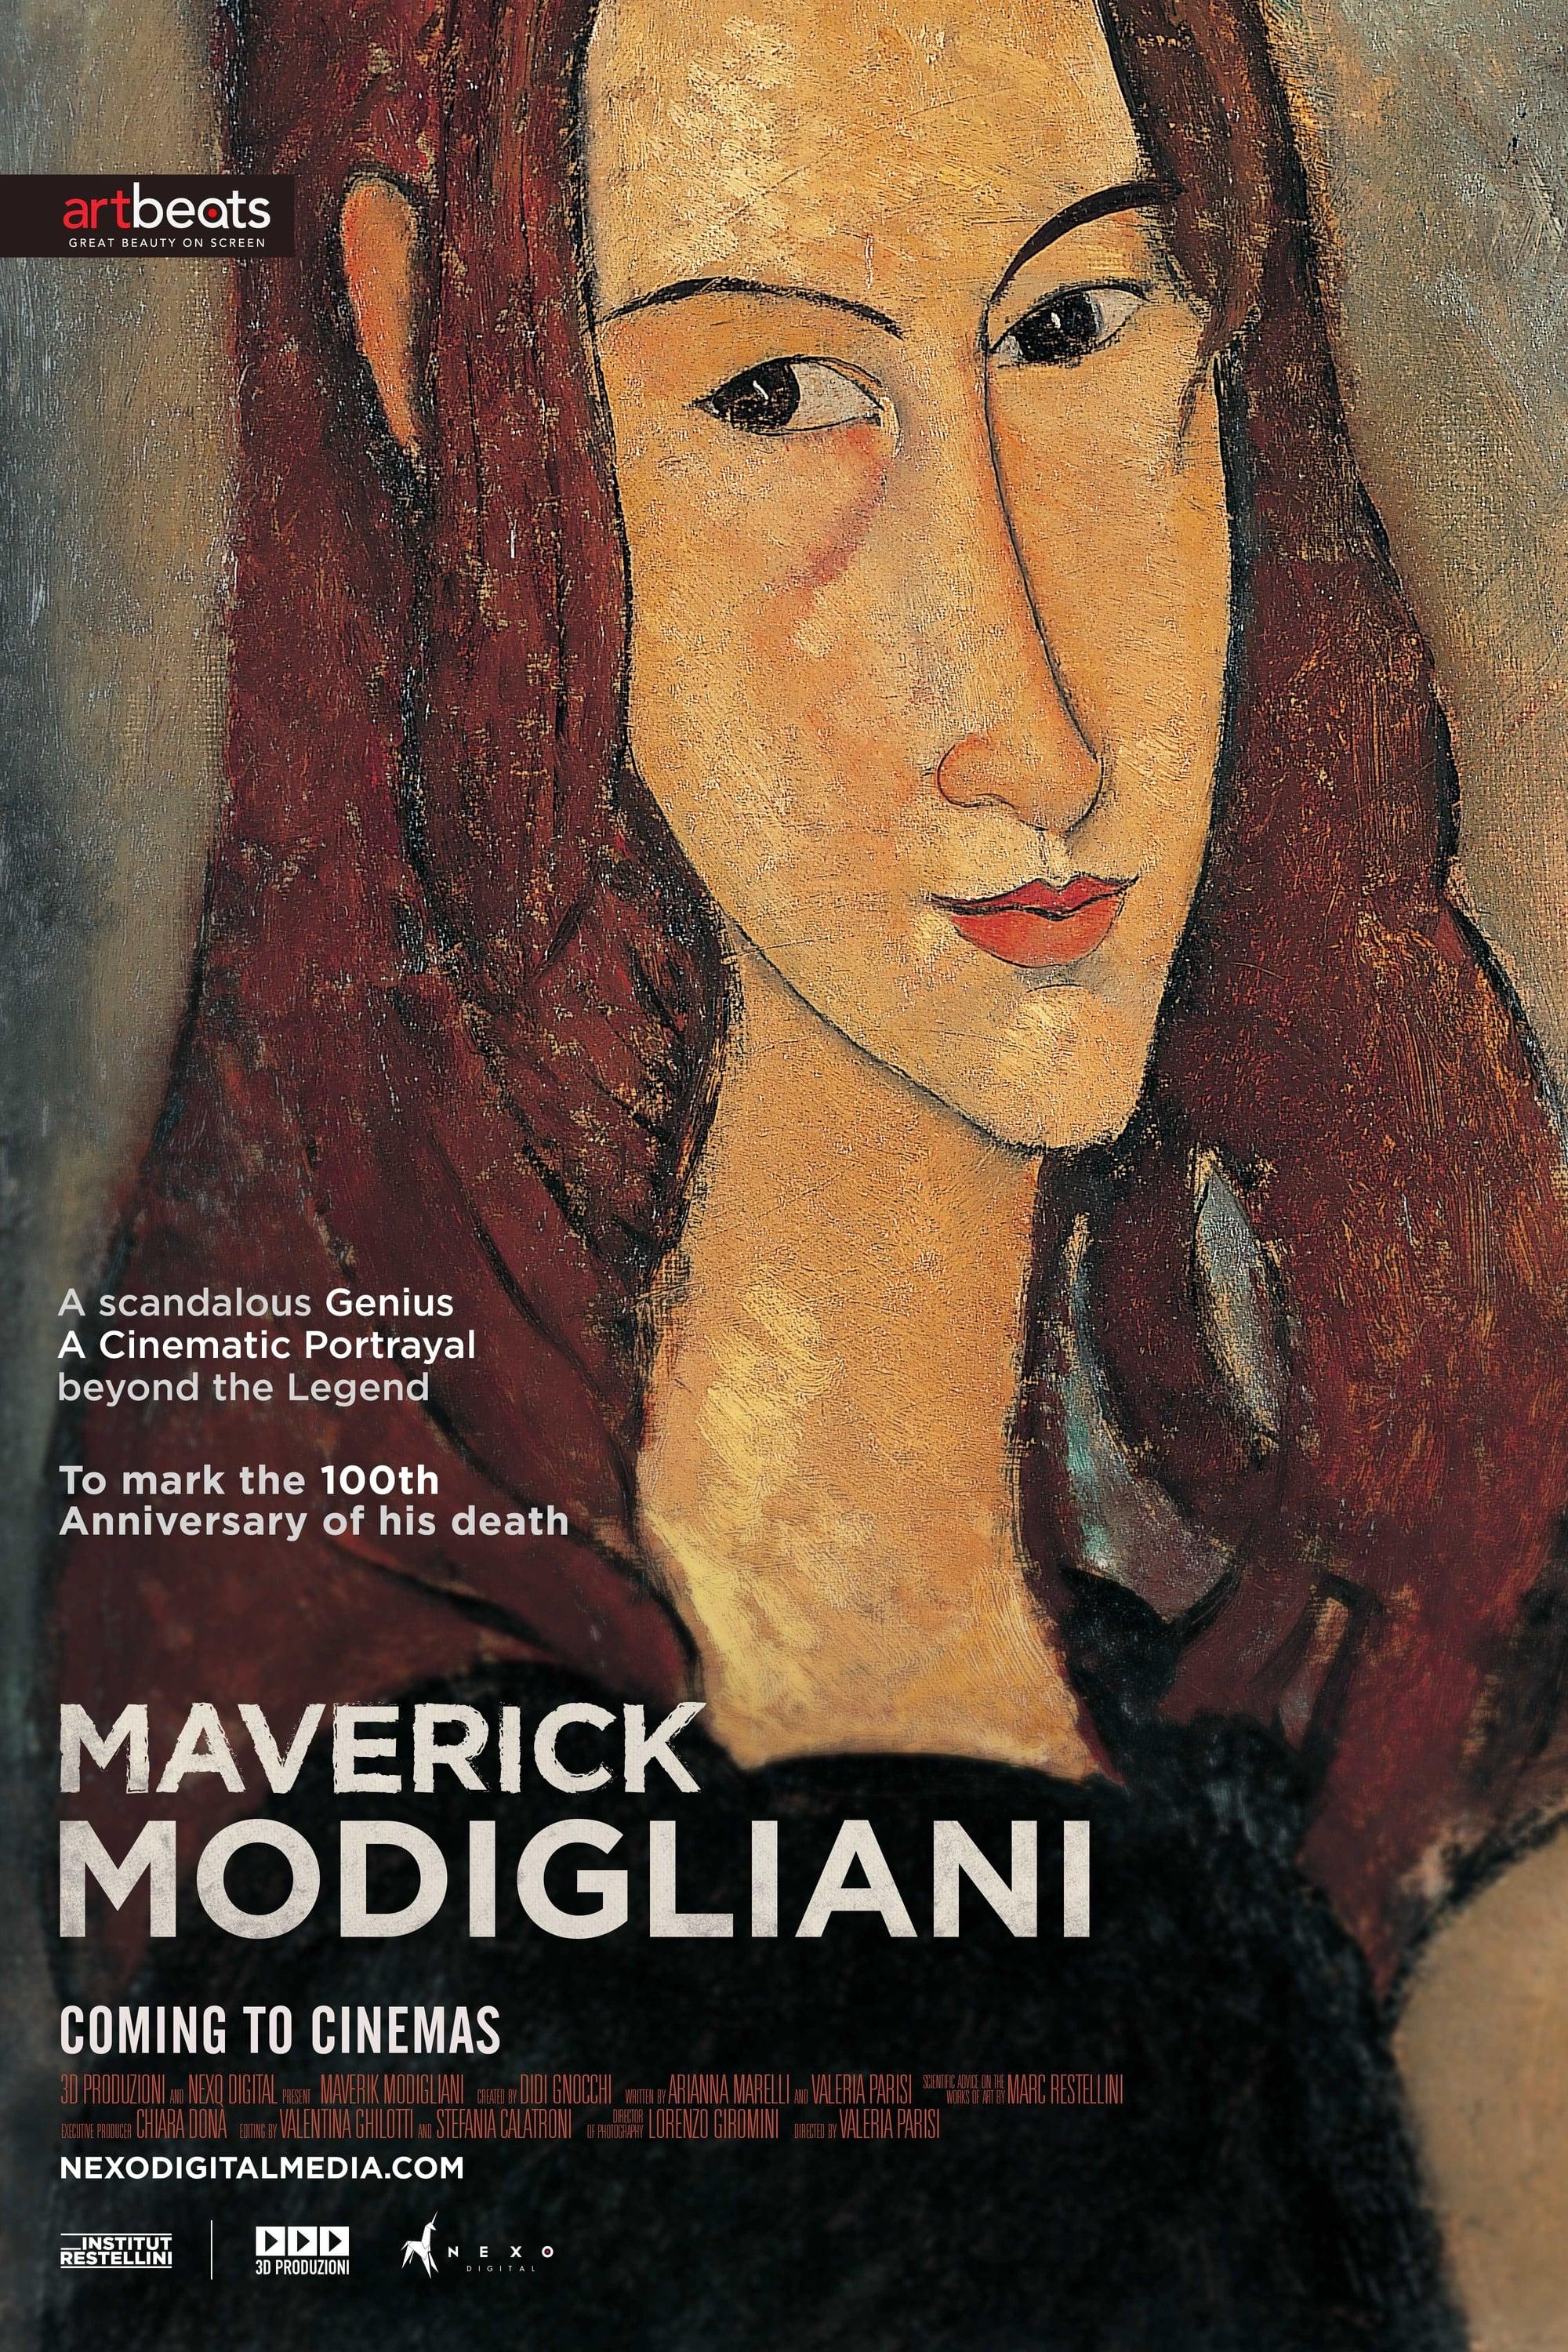 Maverick Modigliani poster